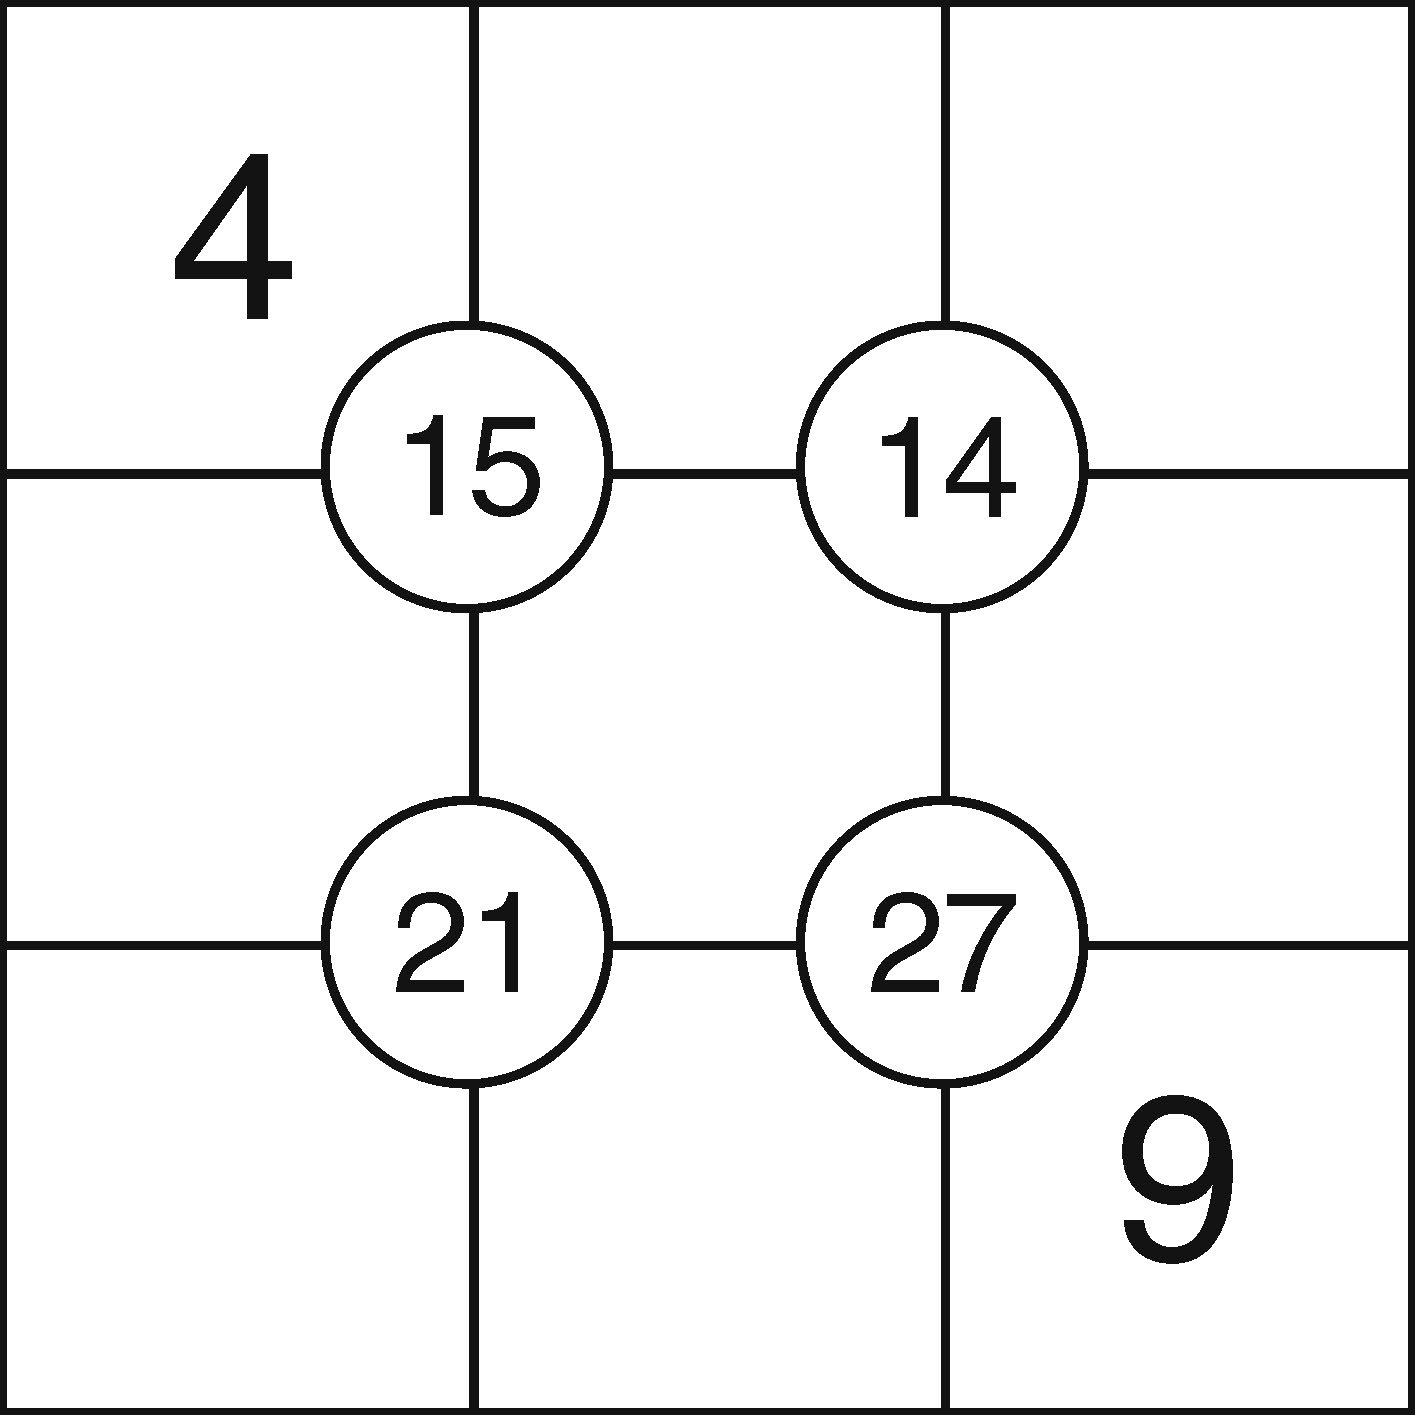 Sekuta unsolved example puzzle